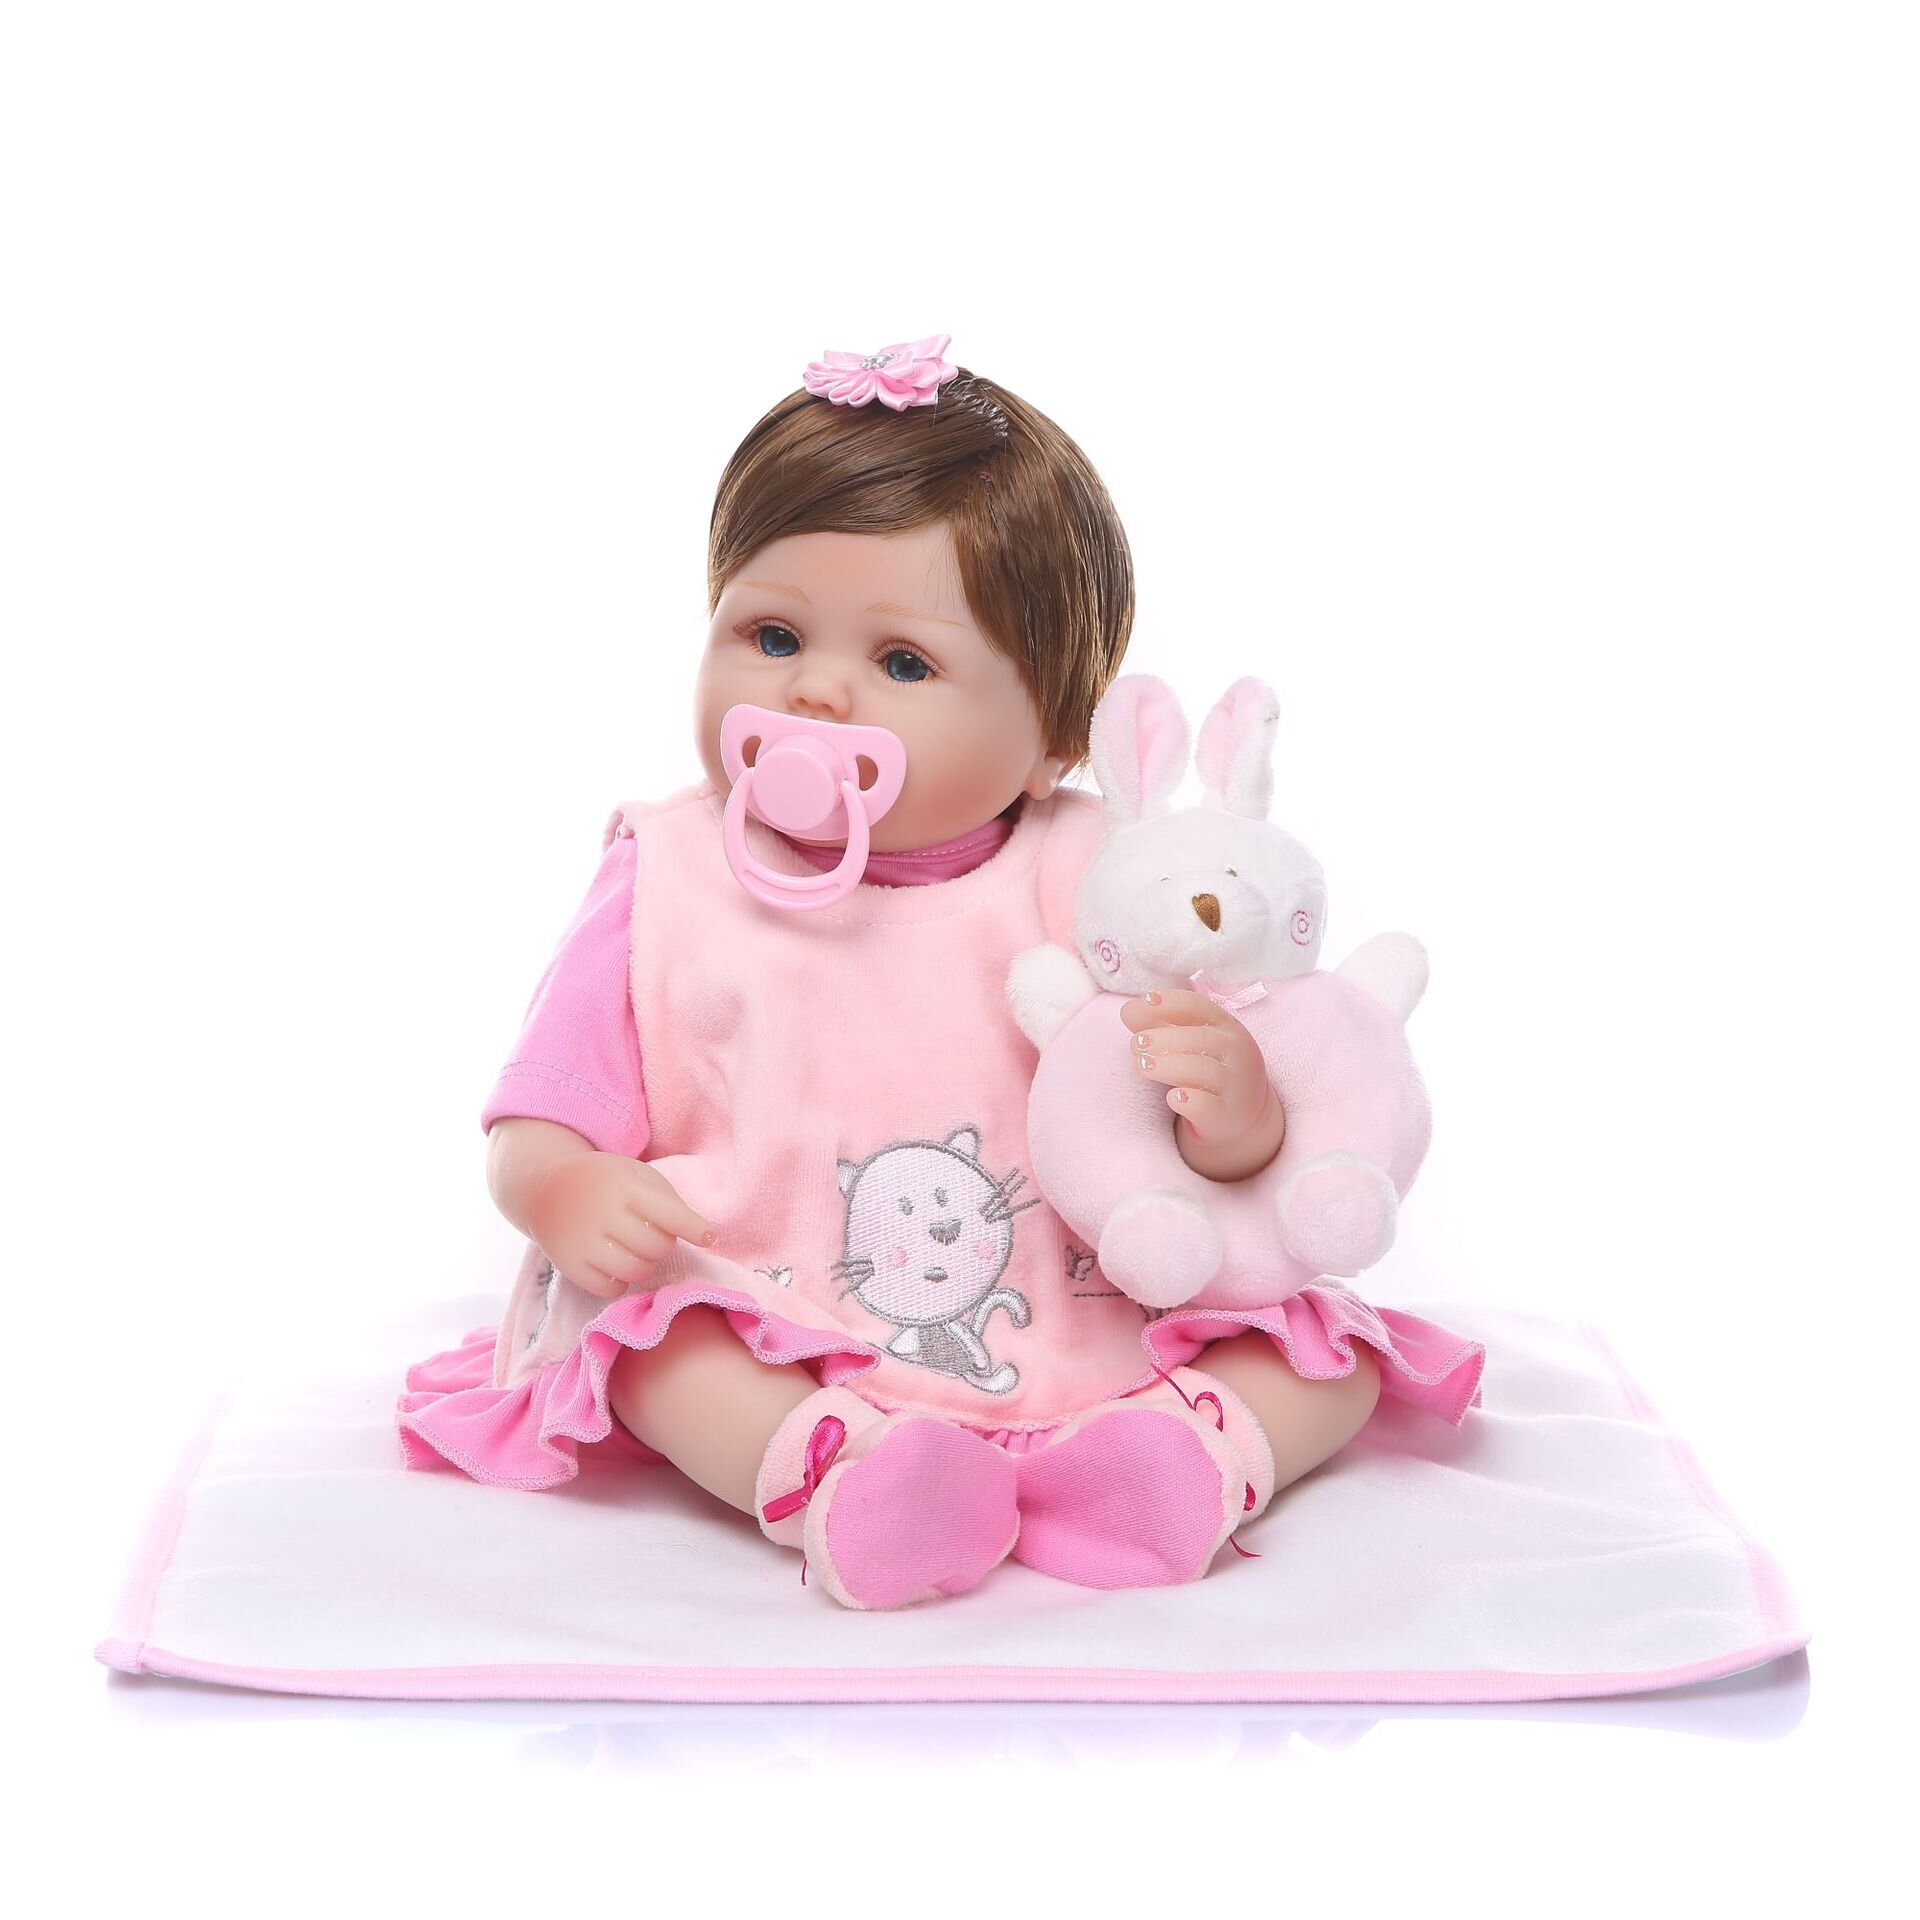 Lifelike Reborn Baby Dolls Set for Kids Age 3+ A7